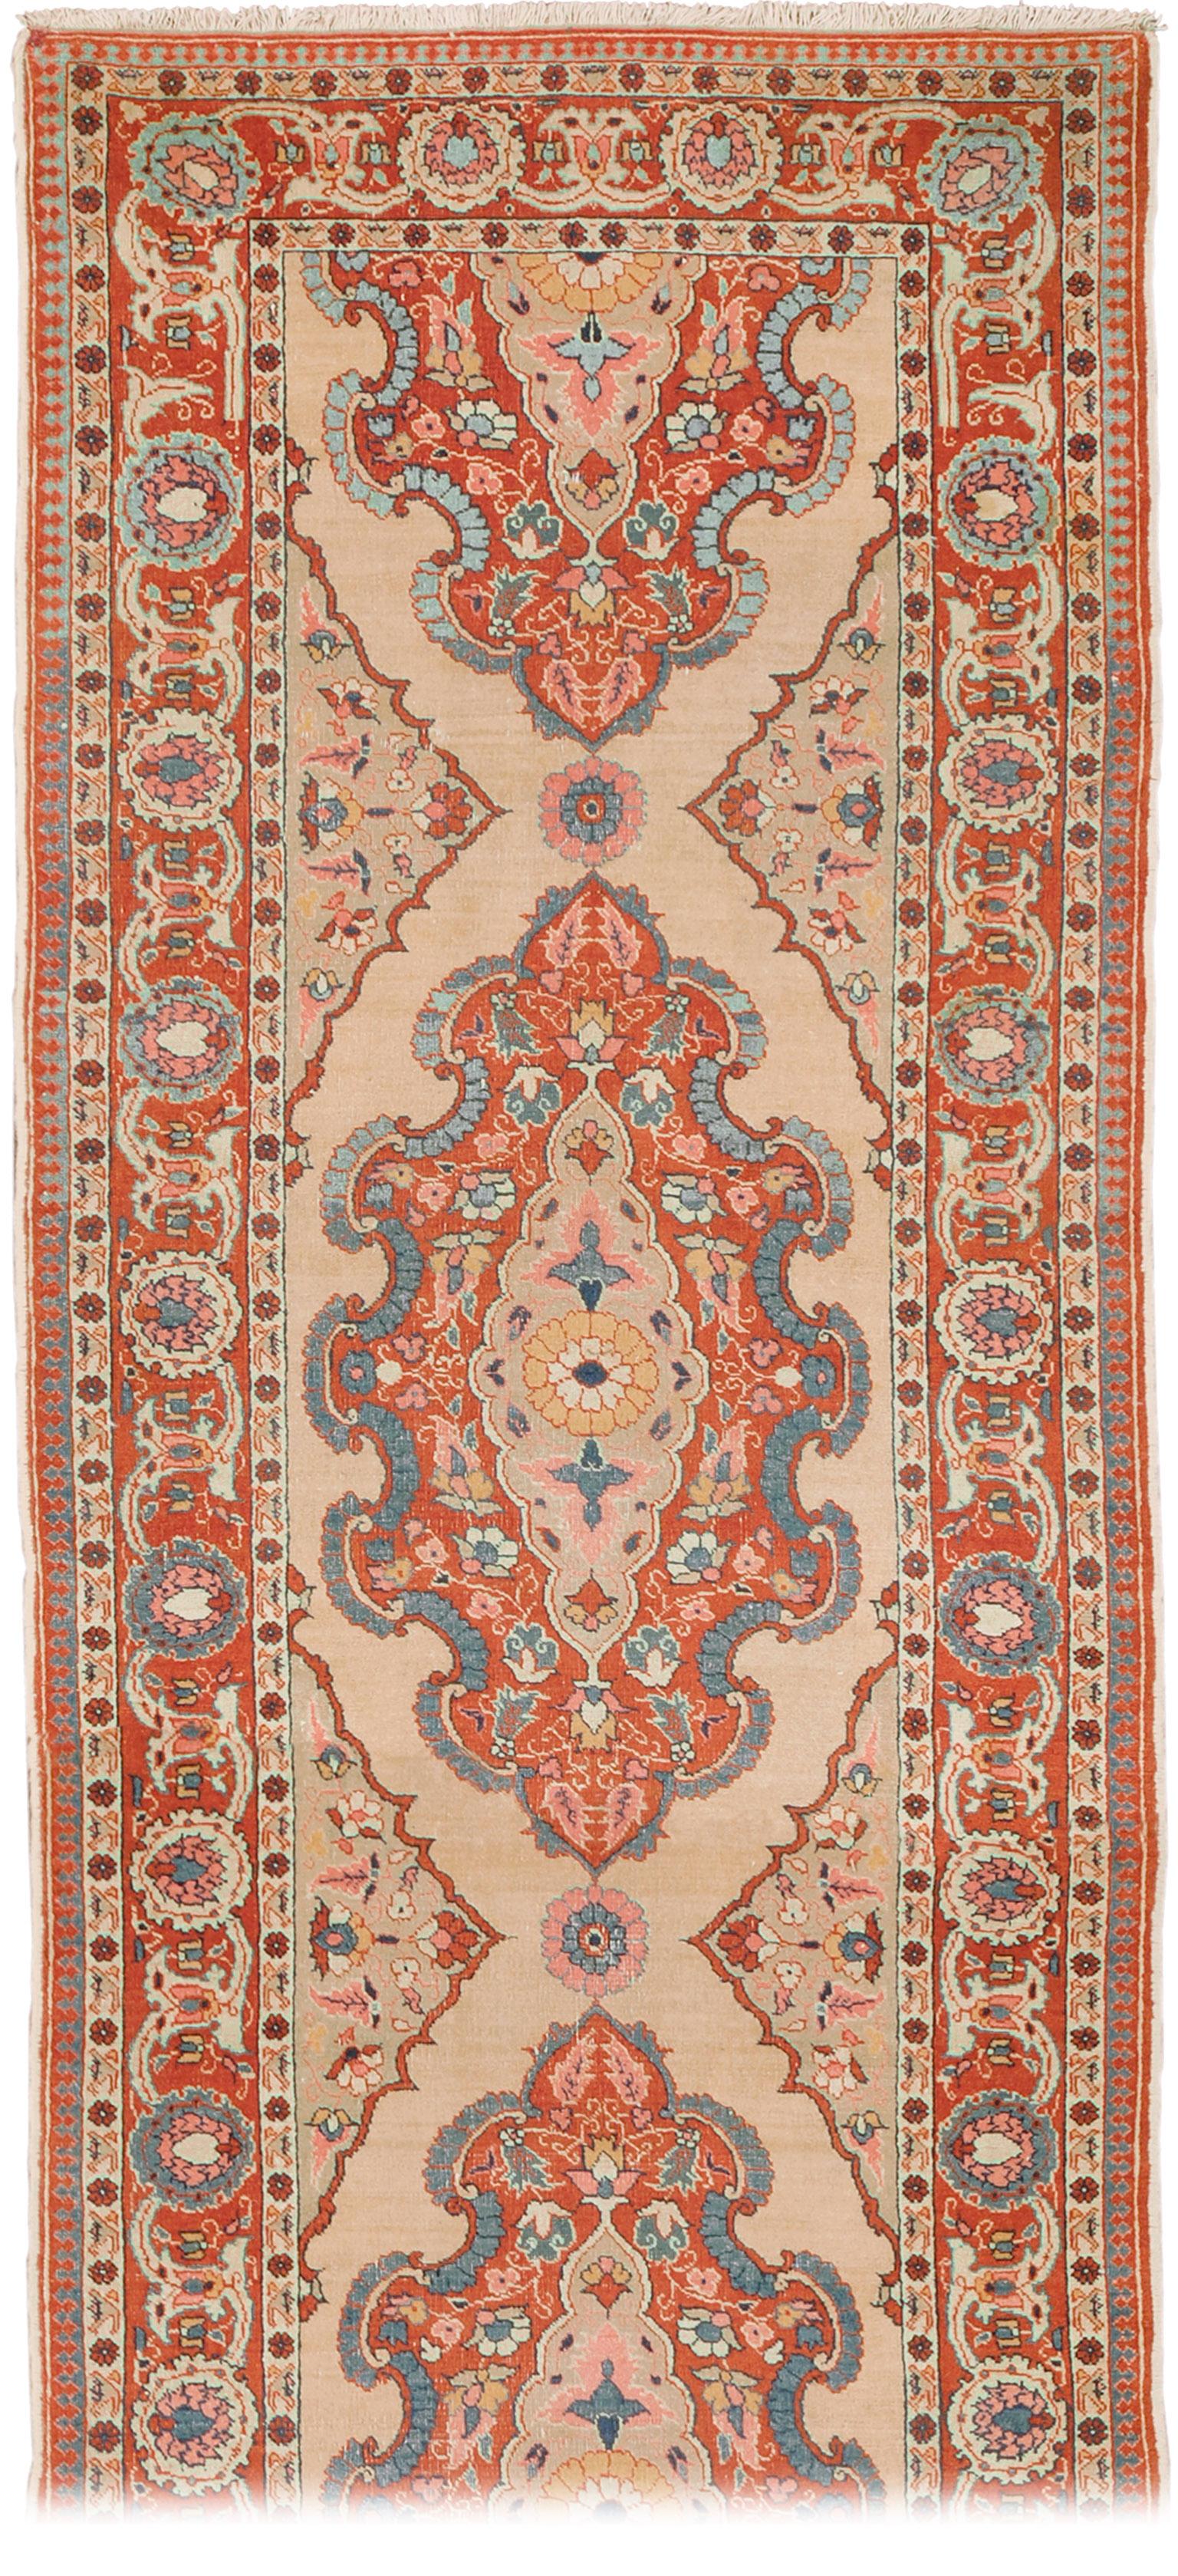 Persia ca. 1900
Measures: 19'1